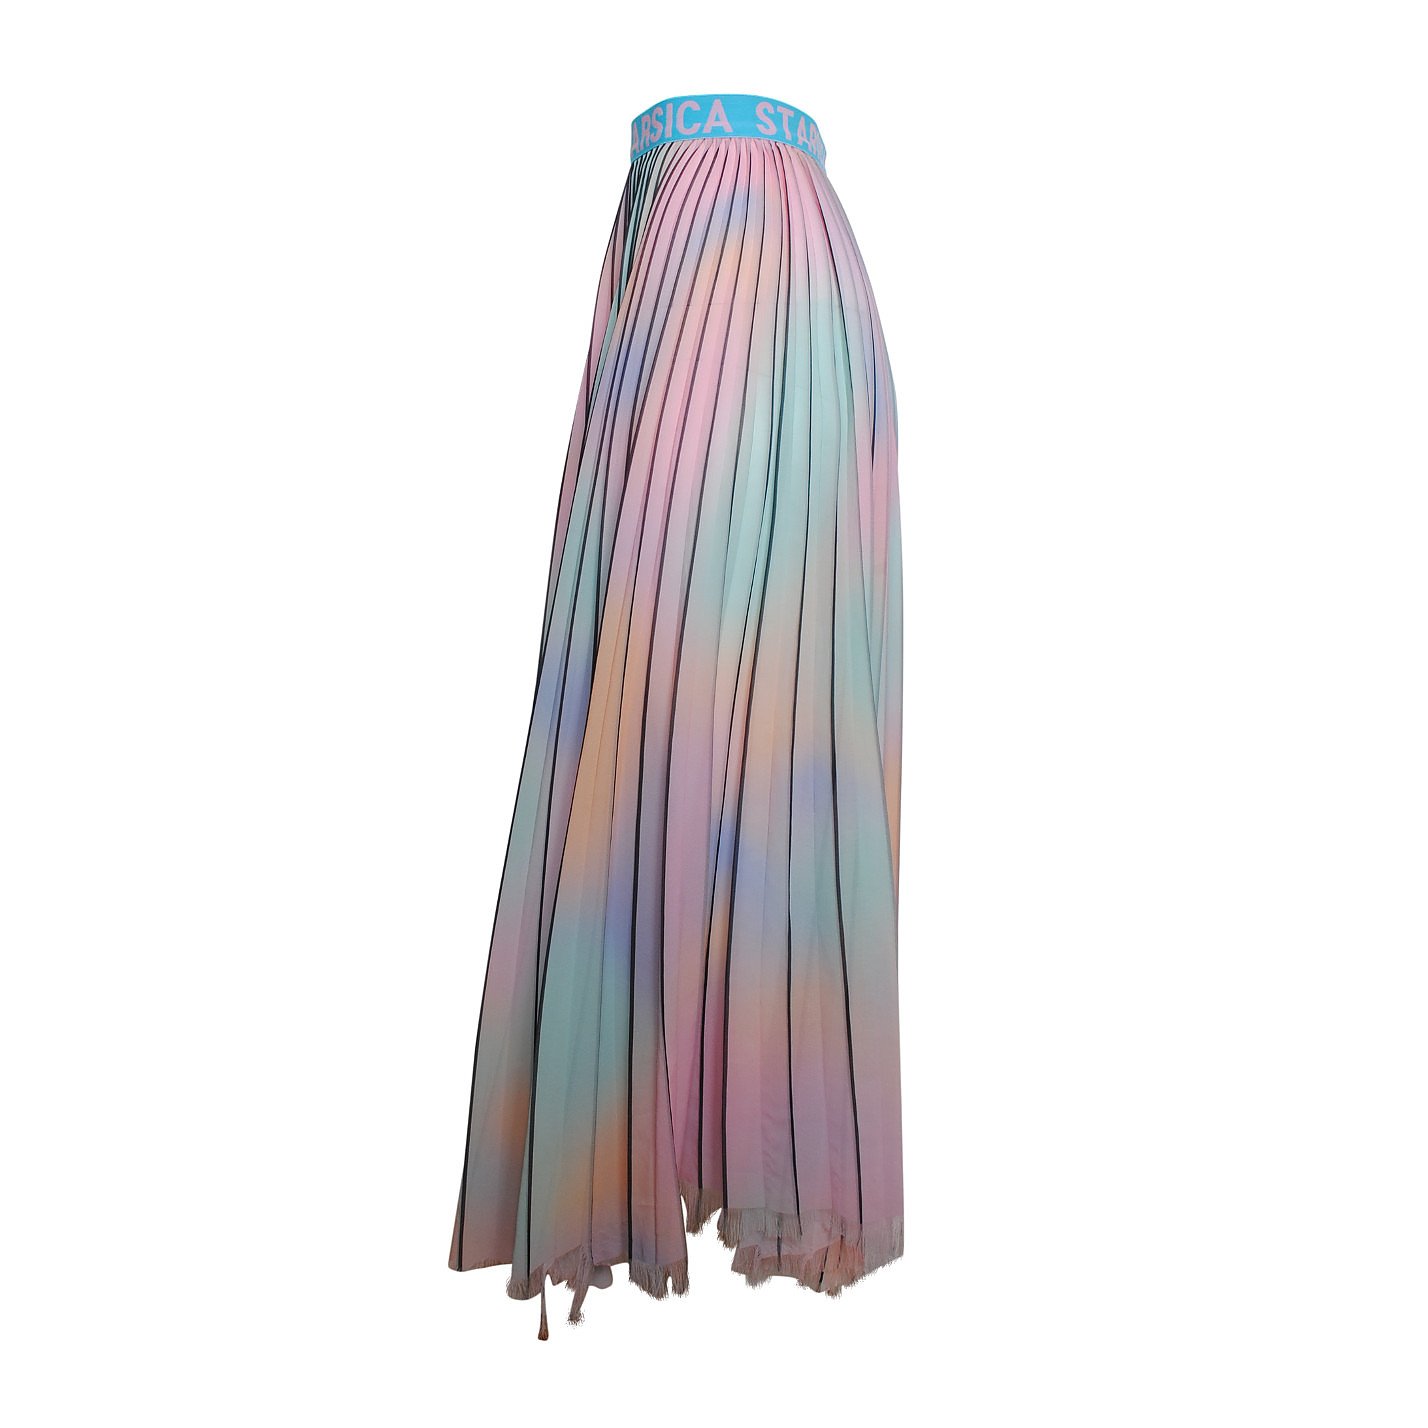 Starsica Pleated Pastel Skirt